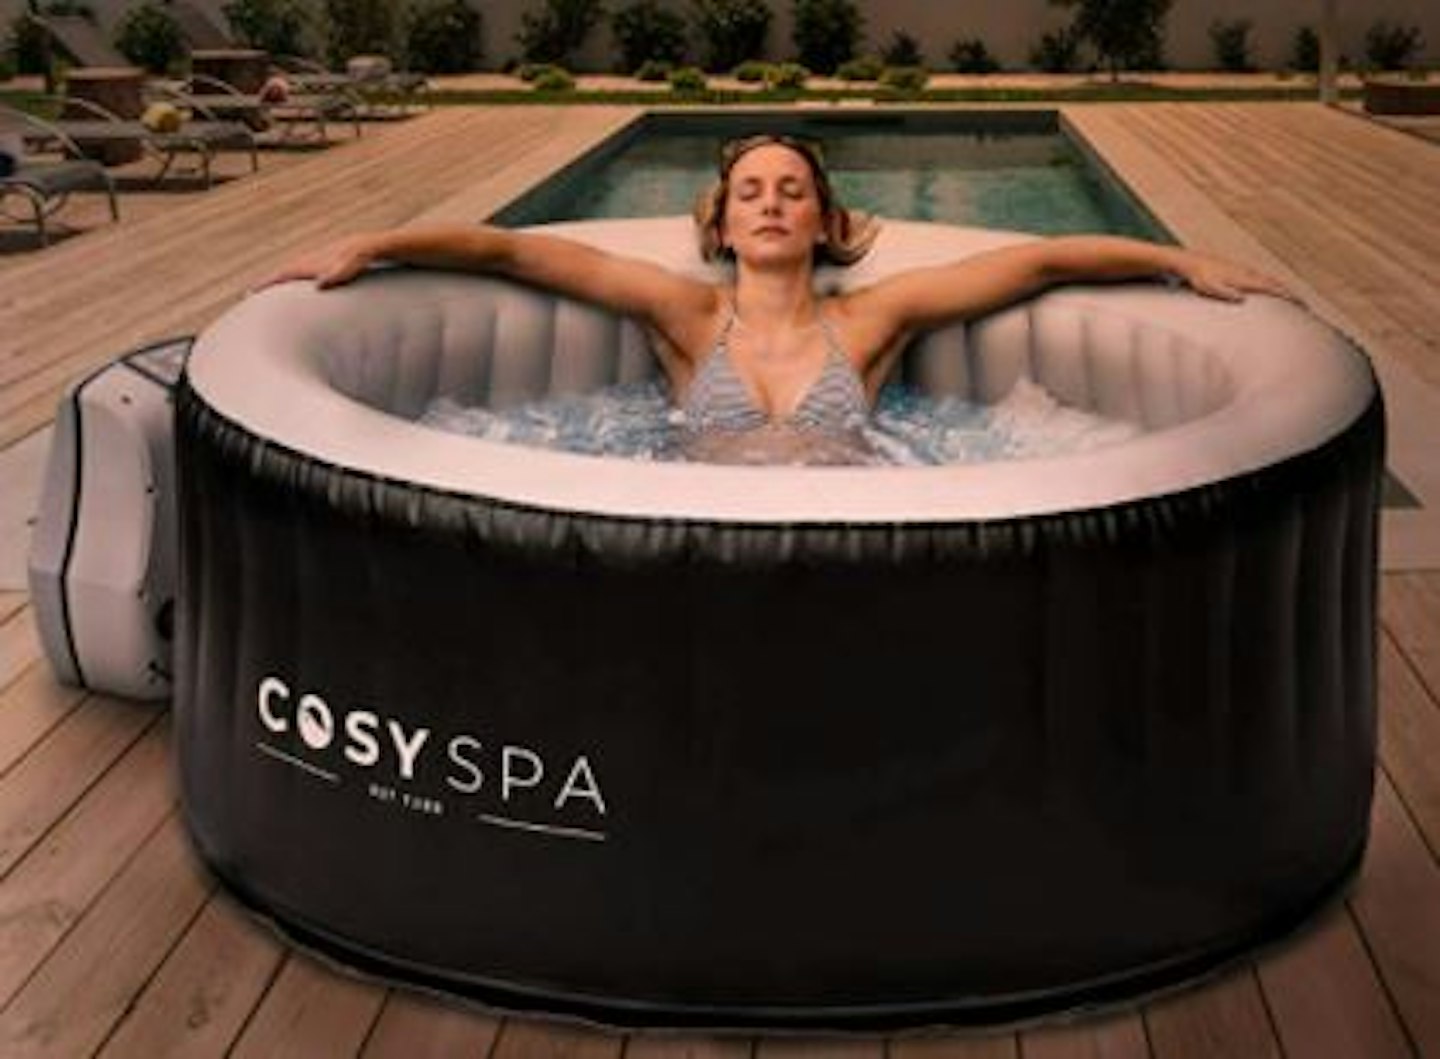 CosySpa Inflatable Hot Tub